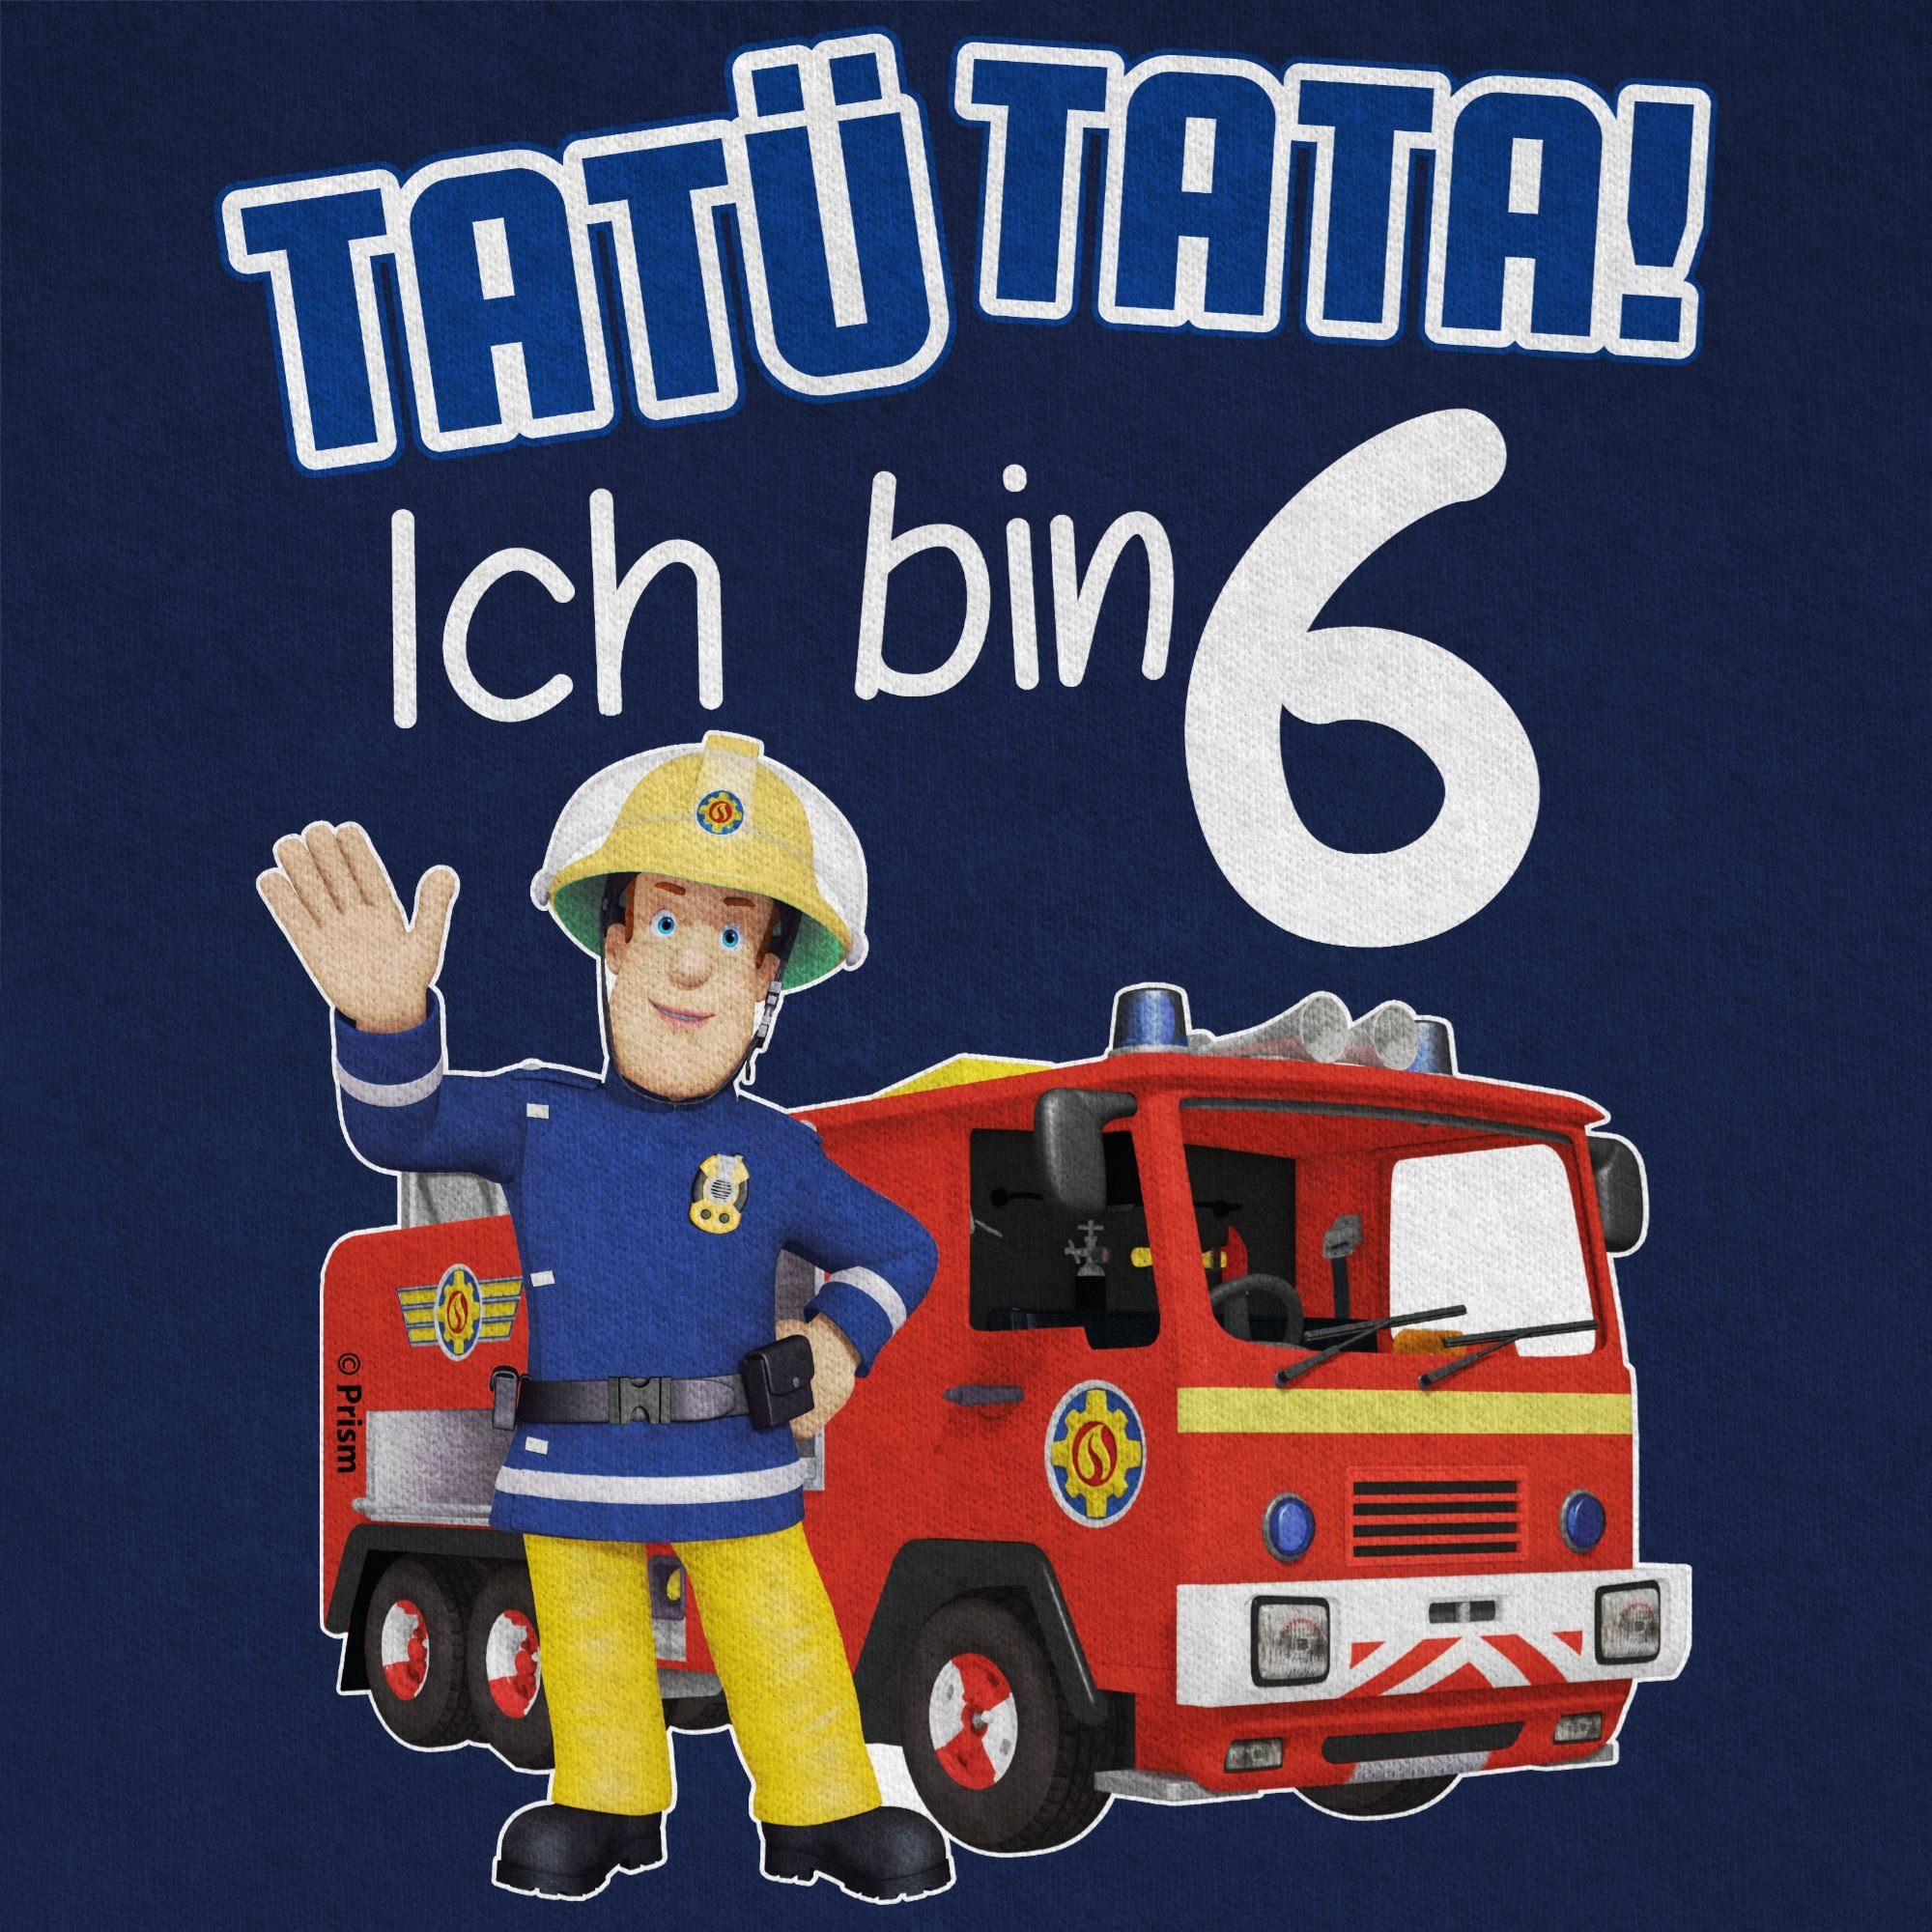 Tatü Jungen blau 03 Ich T-Shirt Dunkelblau Shirtracer Feuerwehrmann - Sam Tata! 6 bin